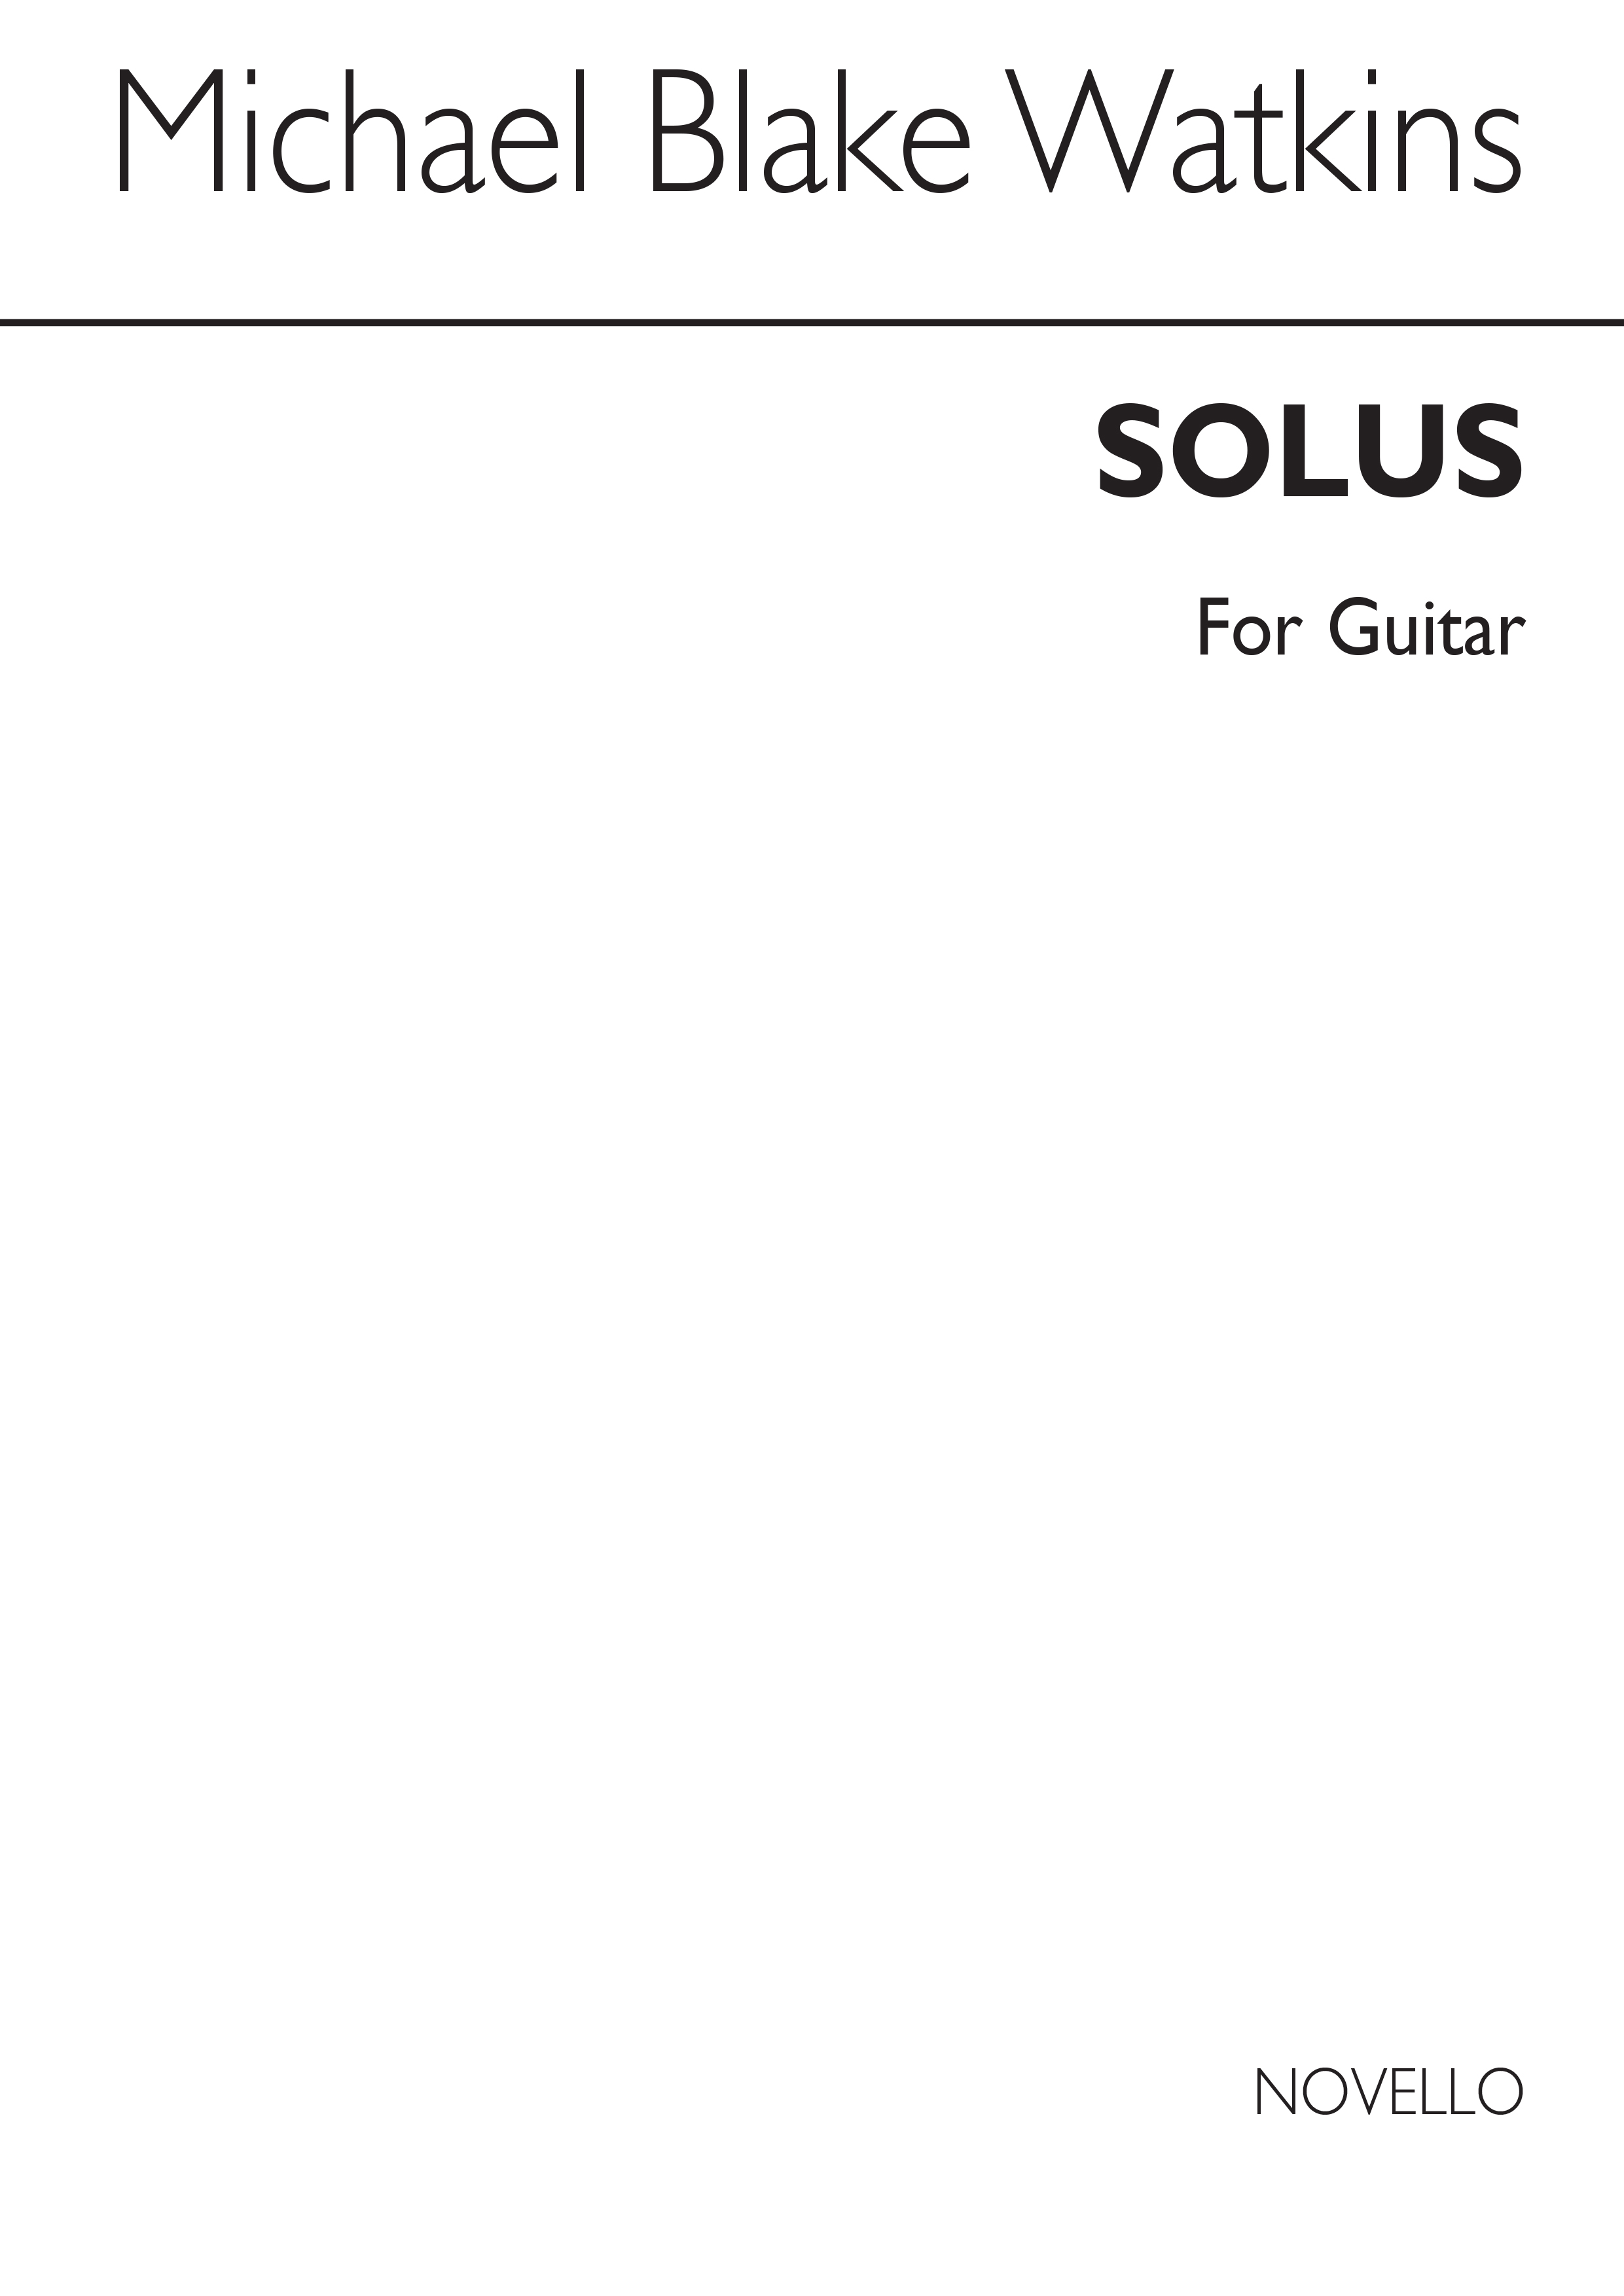 Michael Blake Watkins: Solus for Guitar